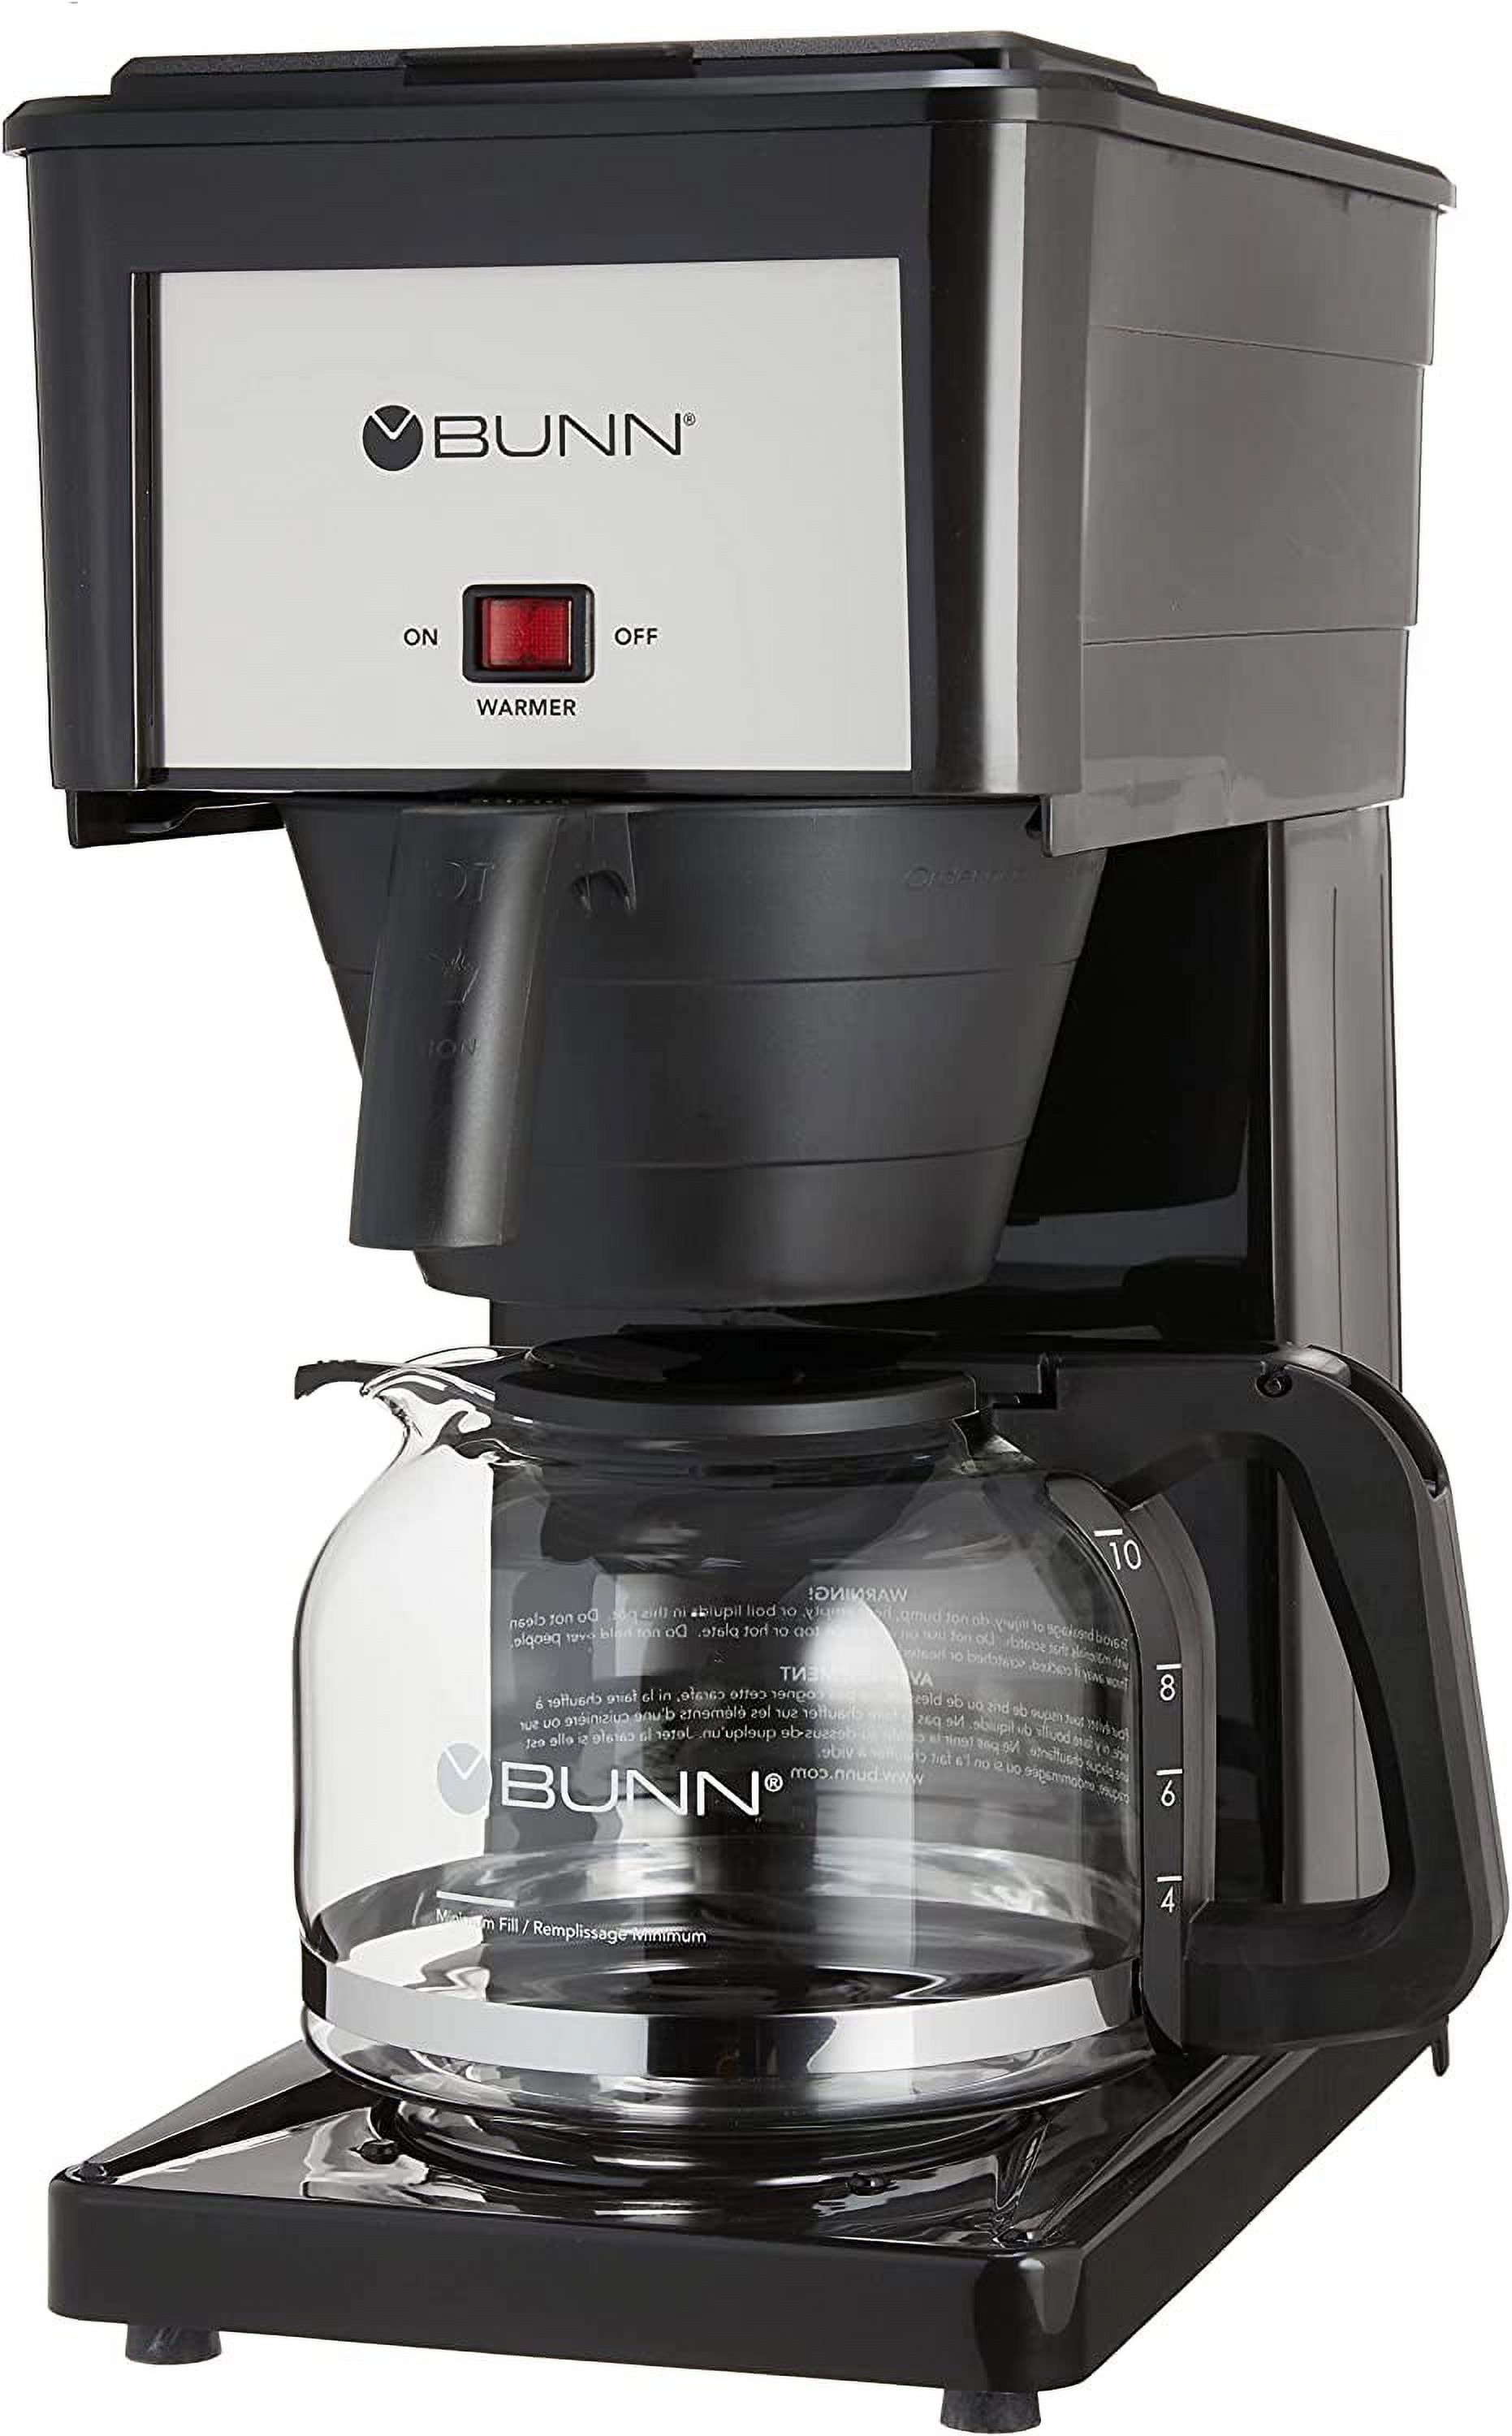 BUNN Black 10 Cup Drip Coffee Maker - image 3 of 15